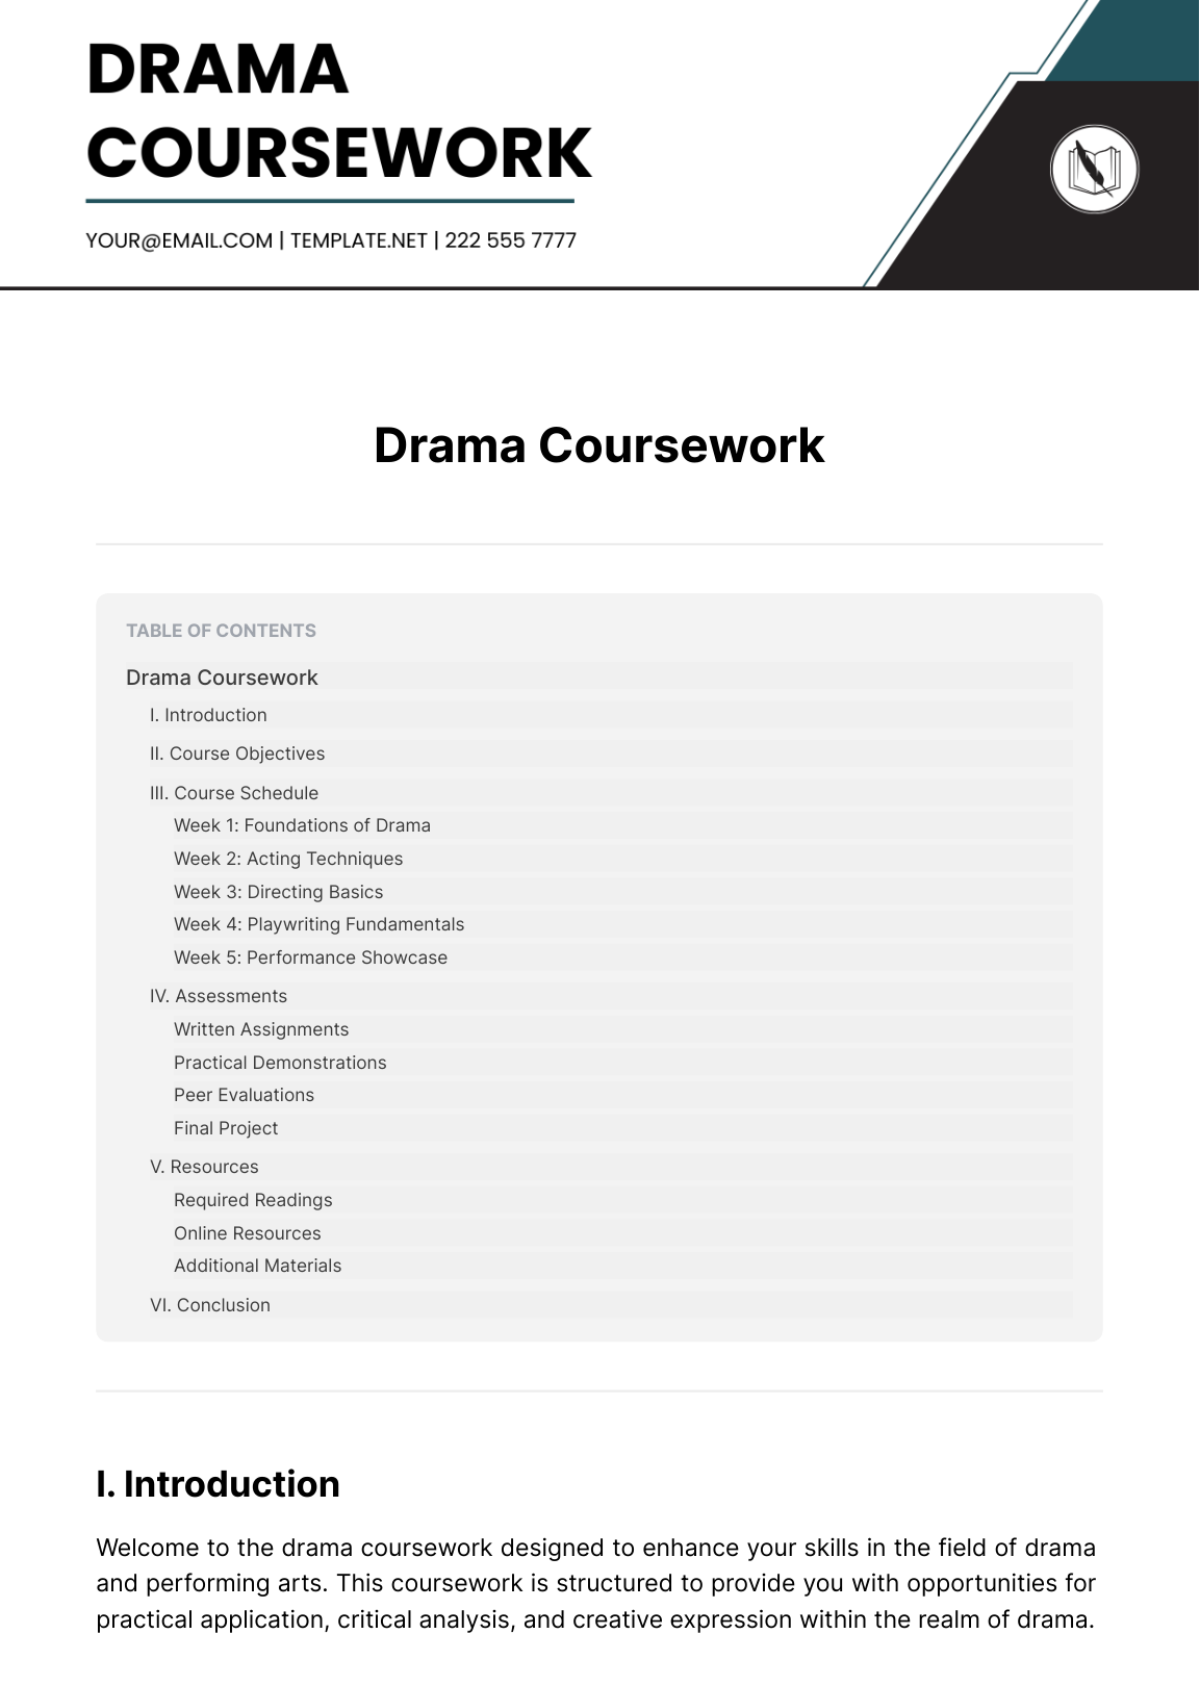 Drama Coursework Template